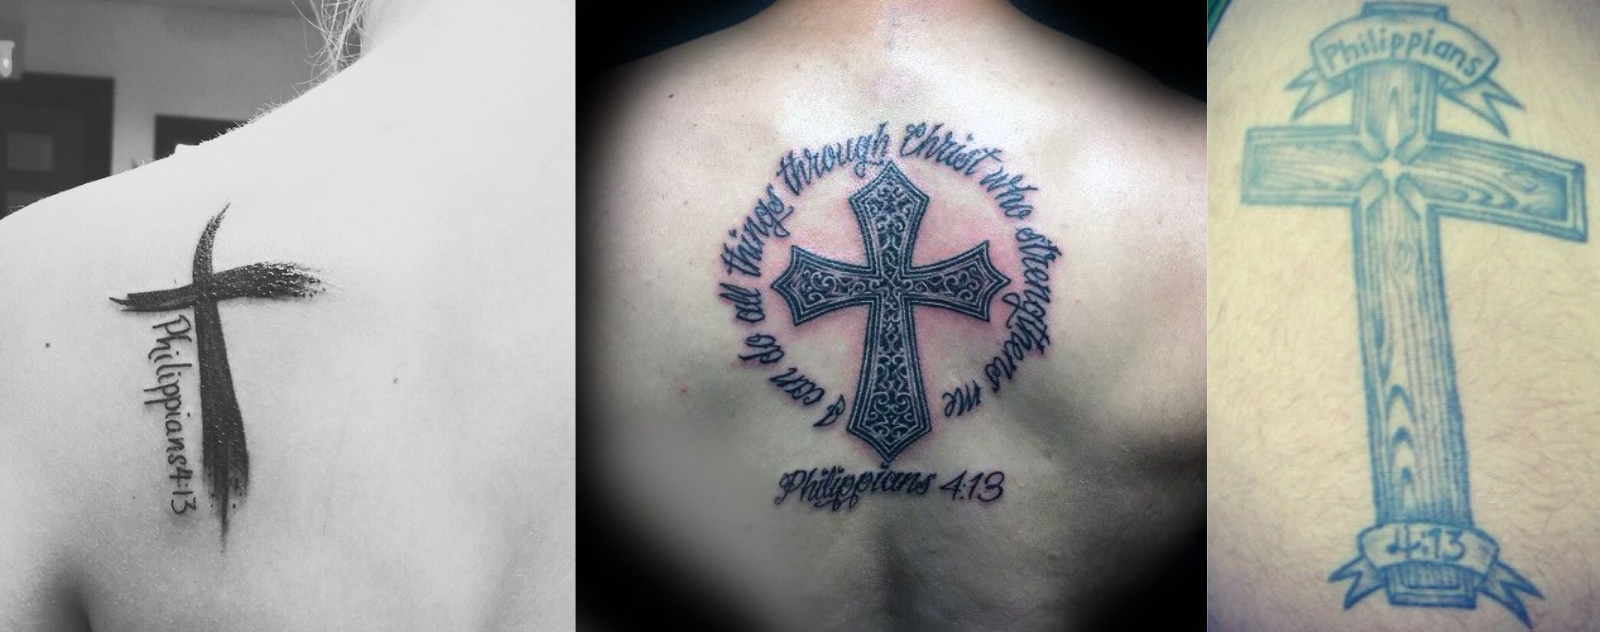 philippians-4-13-tattoo-with-cross-1